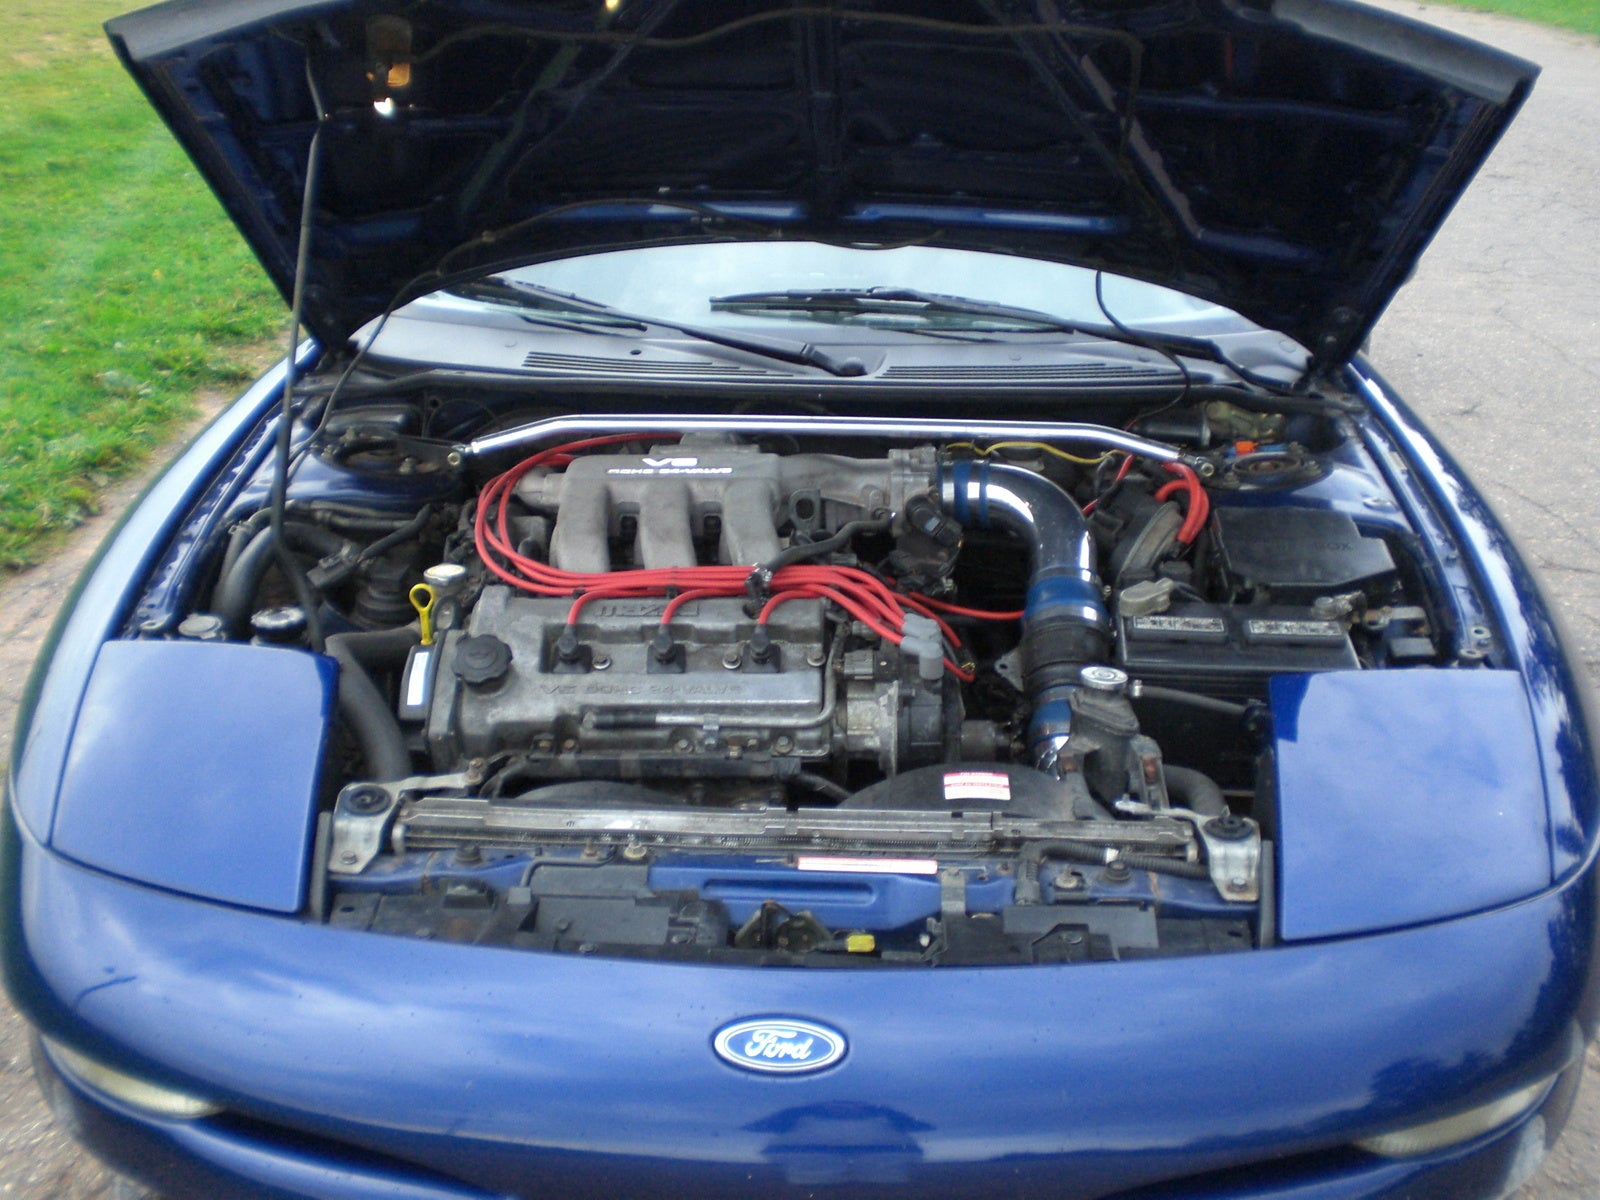 1996 Ford probe engine swap #7